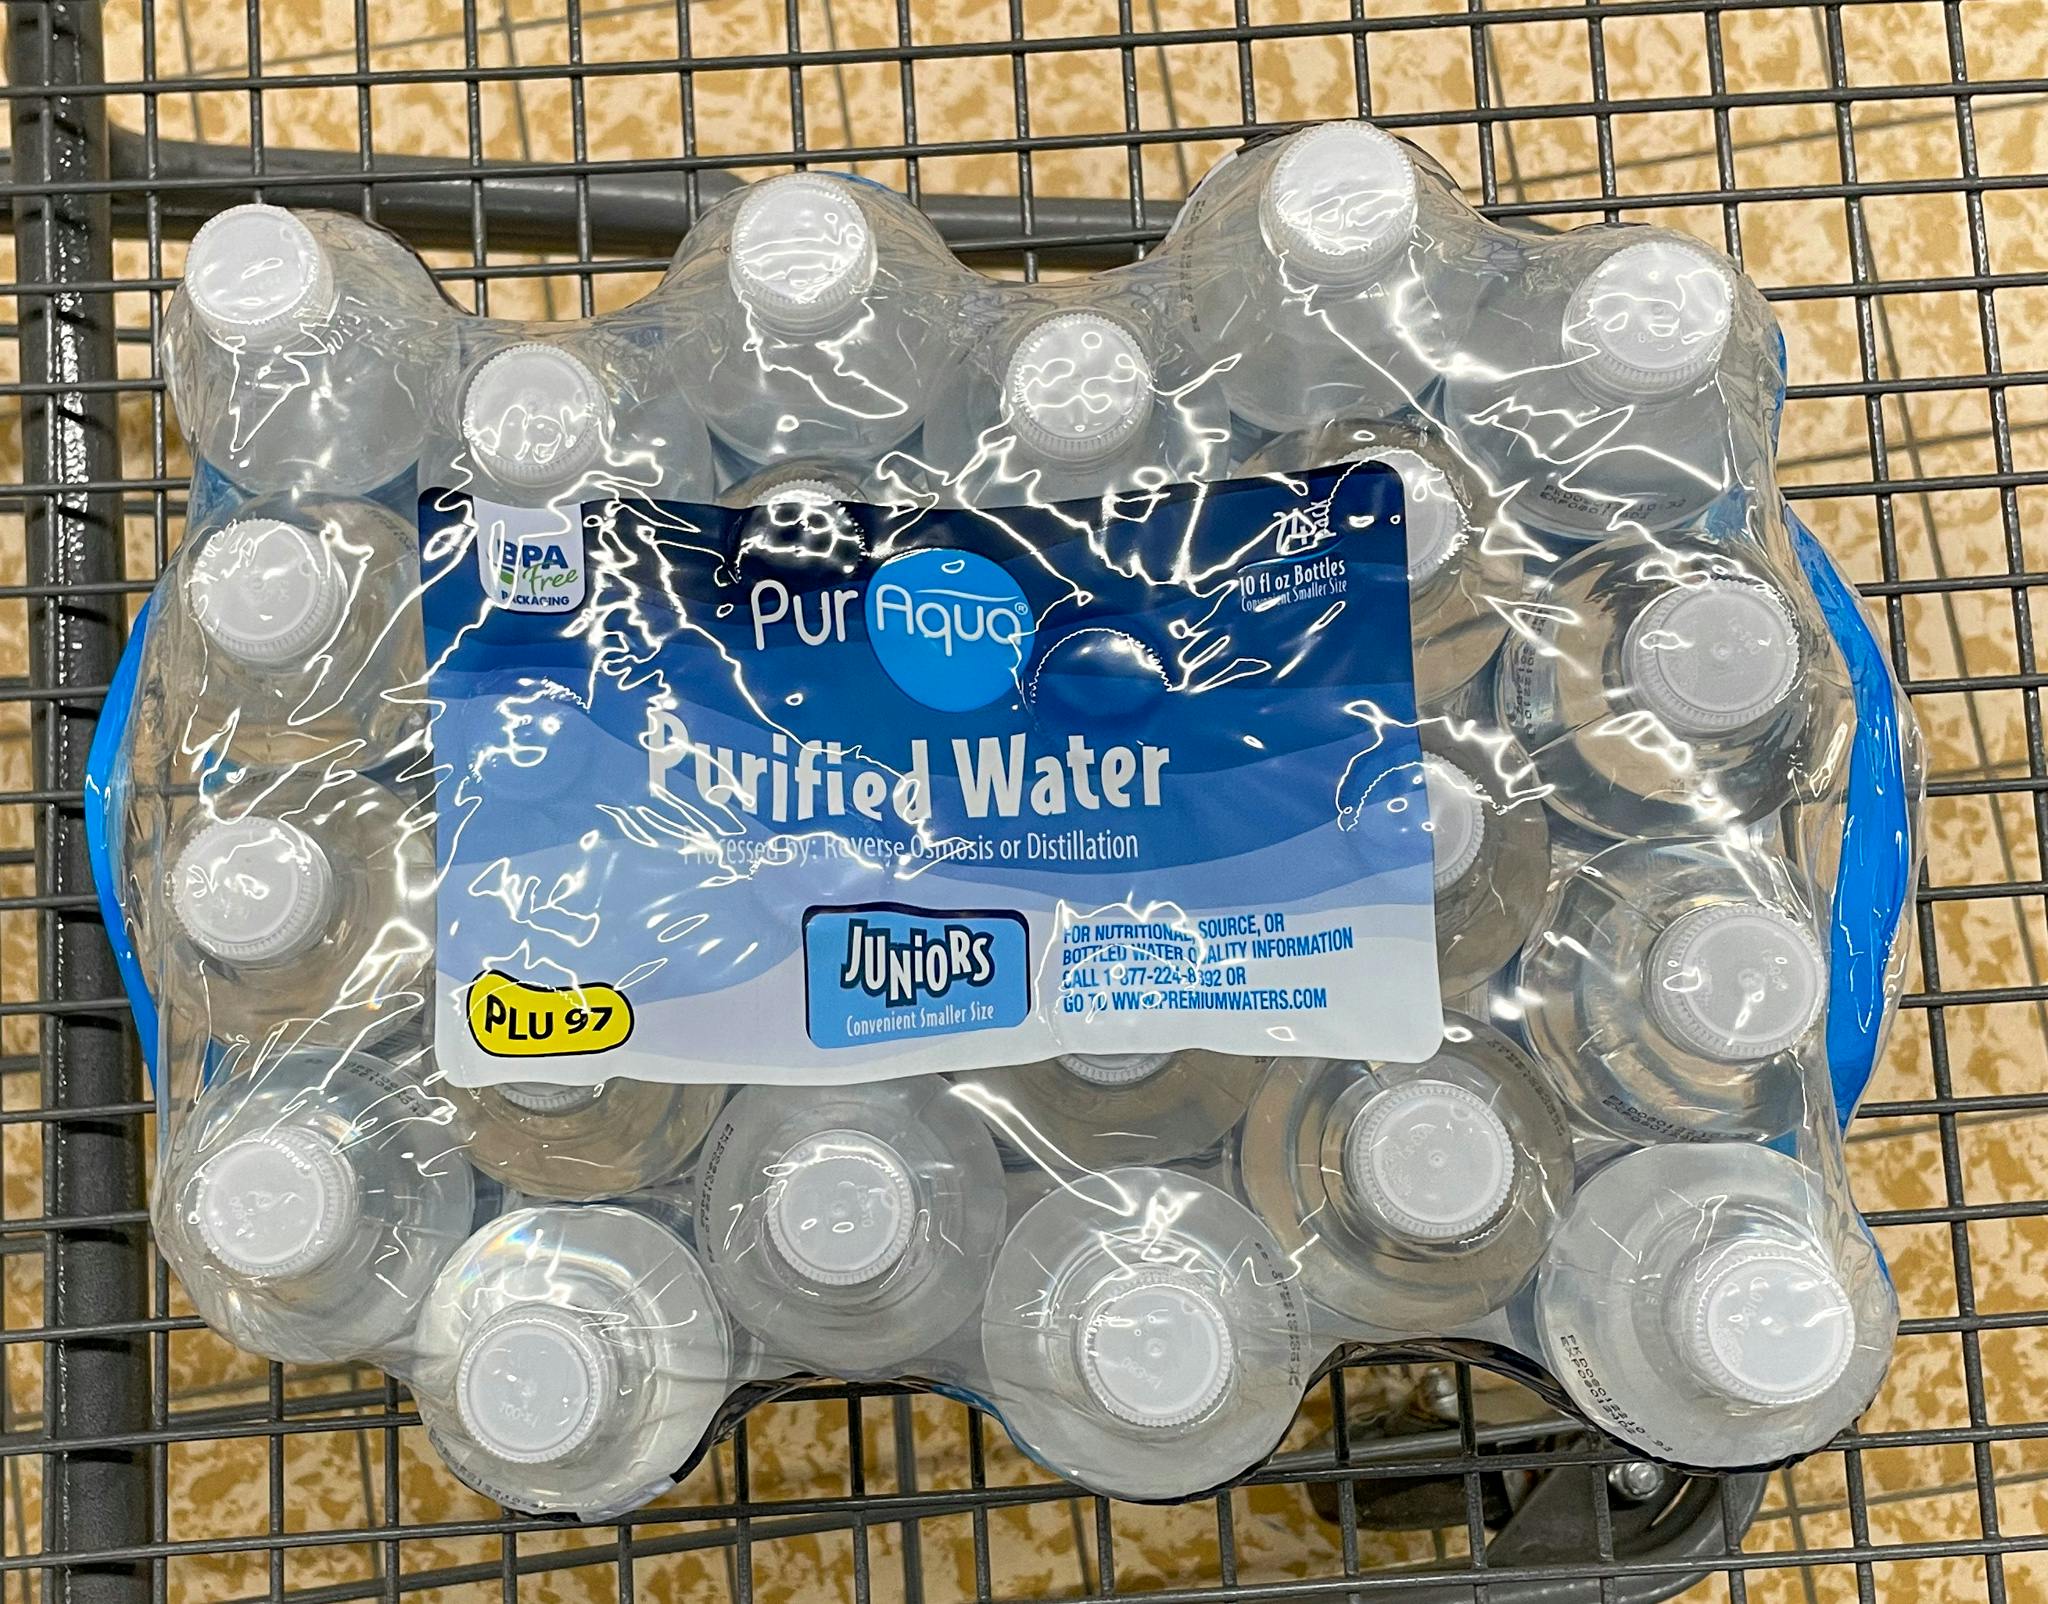 case od water bottles in a cart at aldi